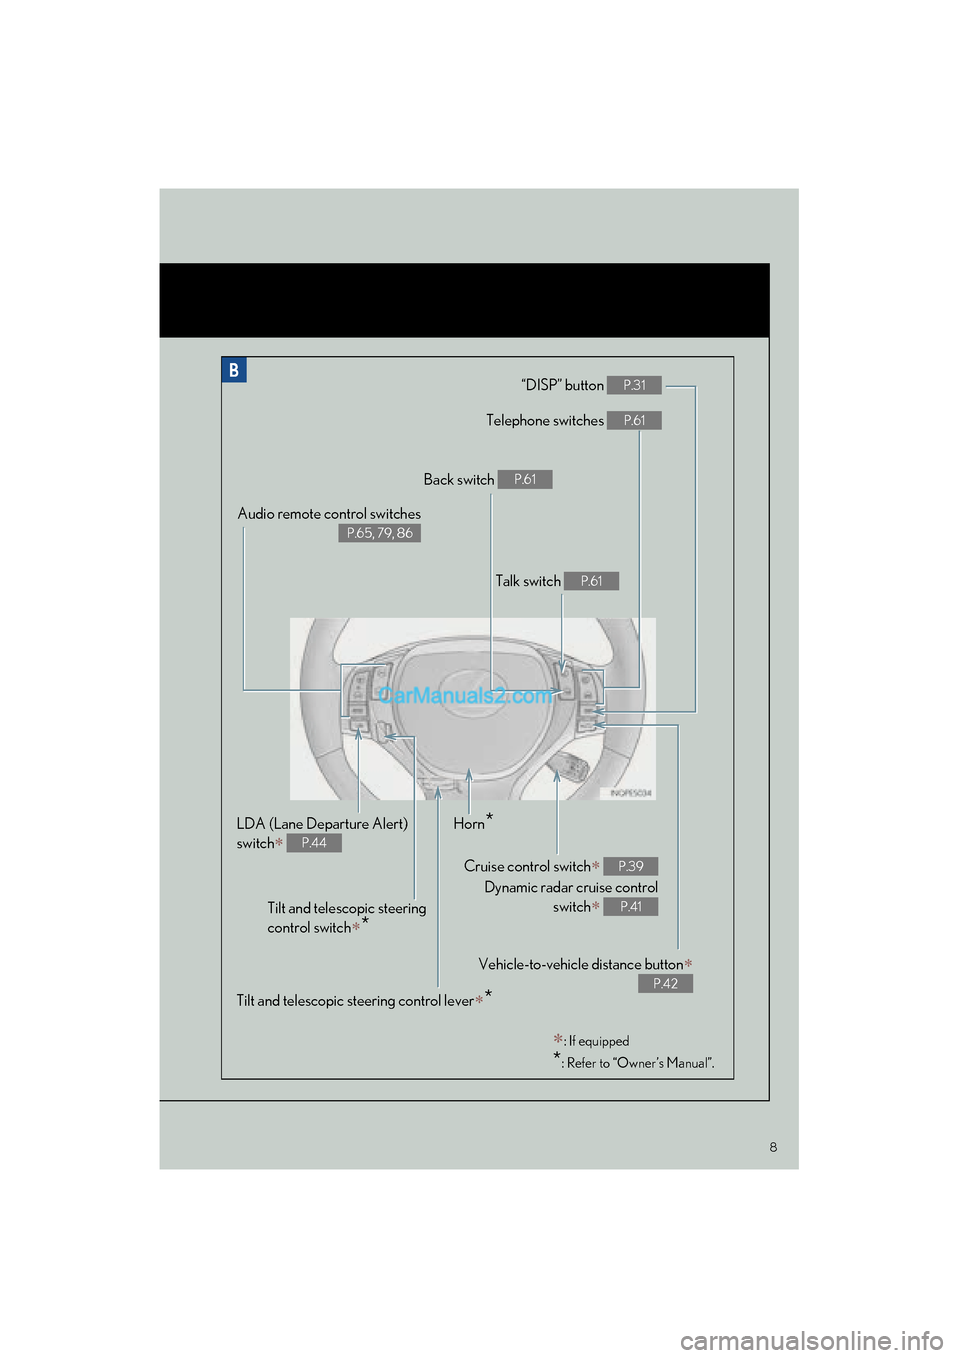 Lexus ES350 2014  Quick Guide 8
ES350_QG_OM33A70U_(U)
“DISP” button P.31
Telephone switches P.61
Vehicle-to-vehicle distance button∗
P.42
Back switch P.61
Talk switch P.61
Audio remote control switches
P.65, 79, 86
LDA (Lane